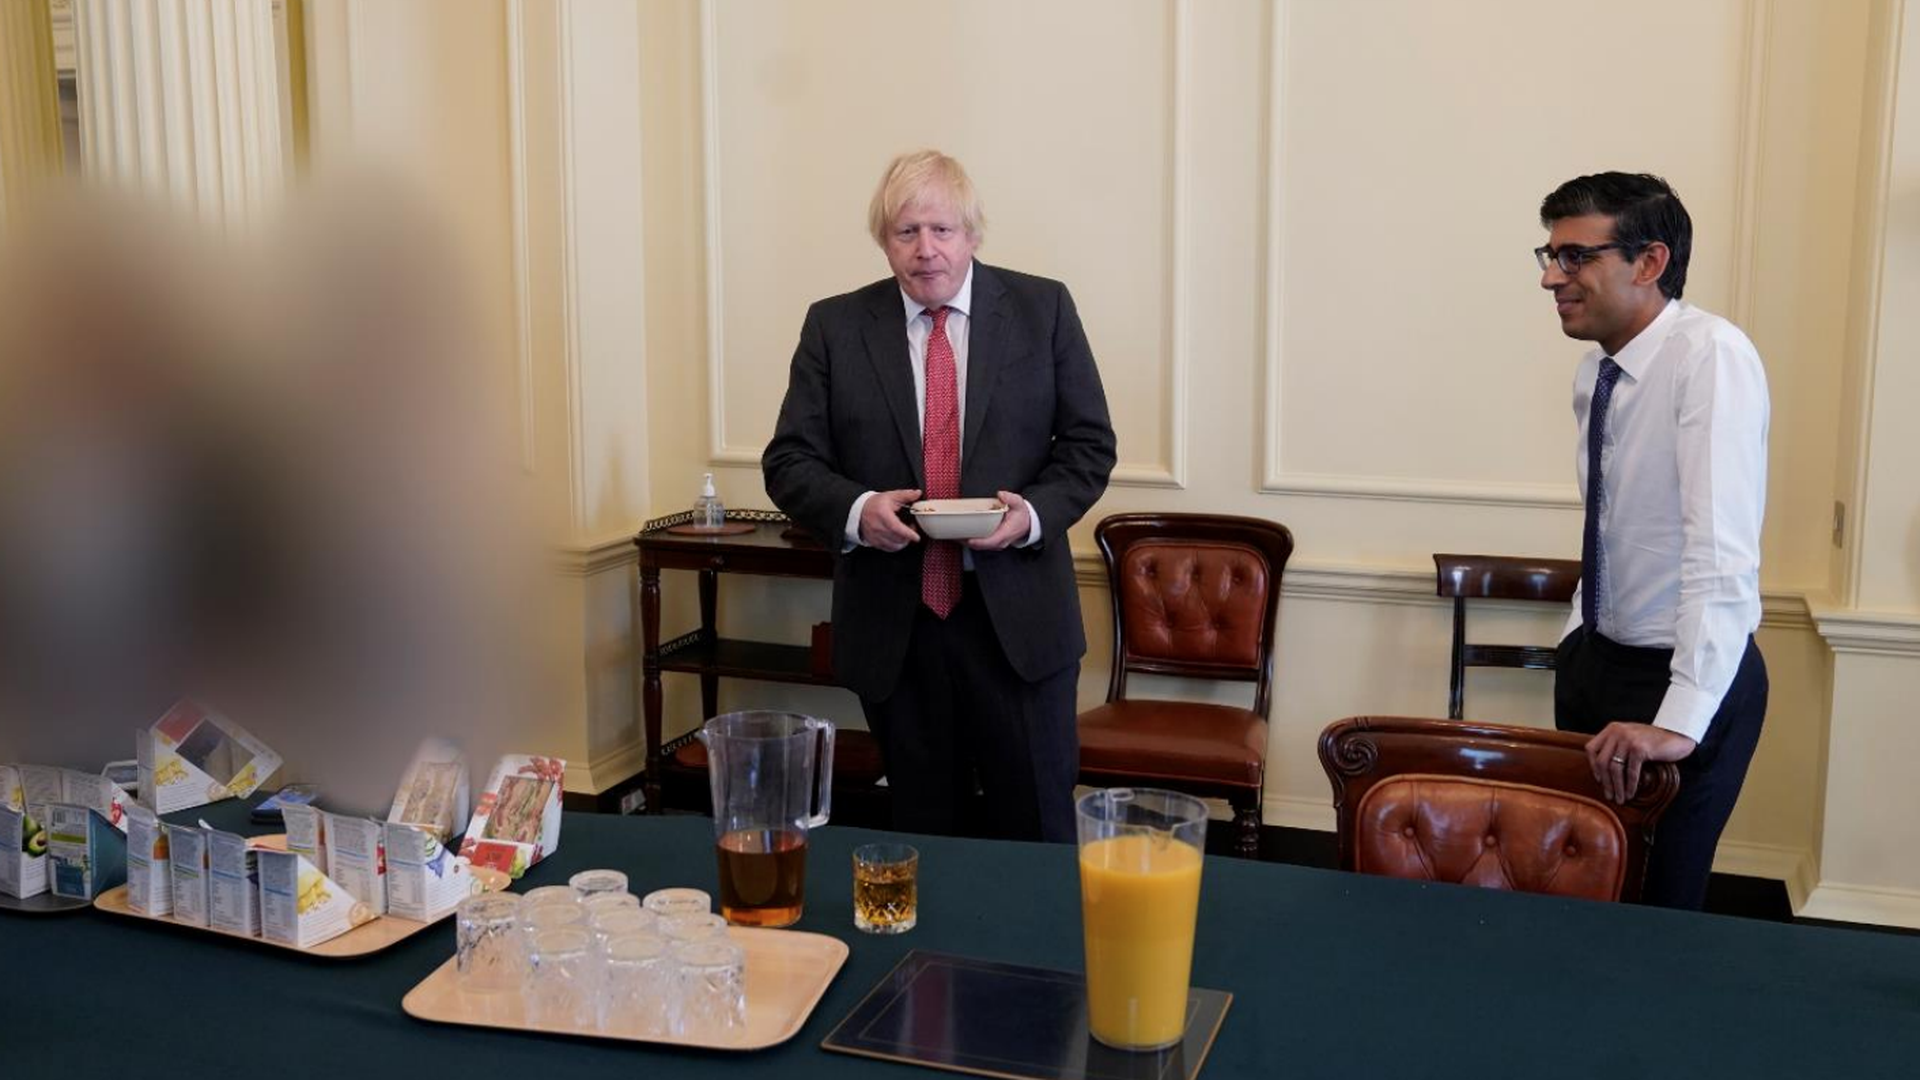 A photo showing Boris Johnson from Sue Gray's report